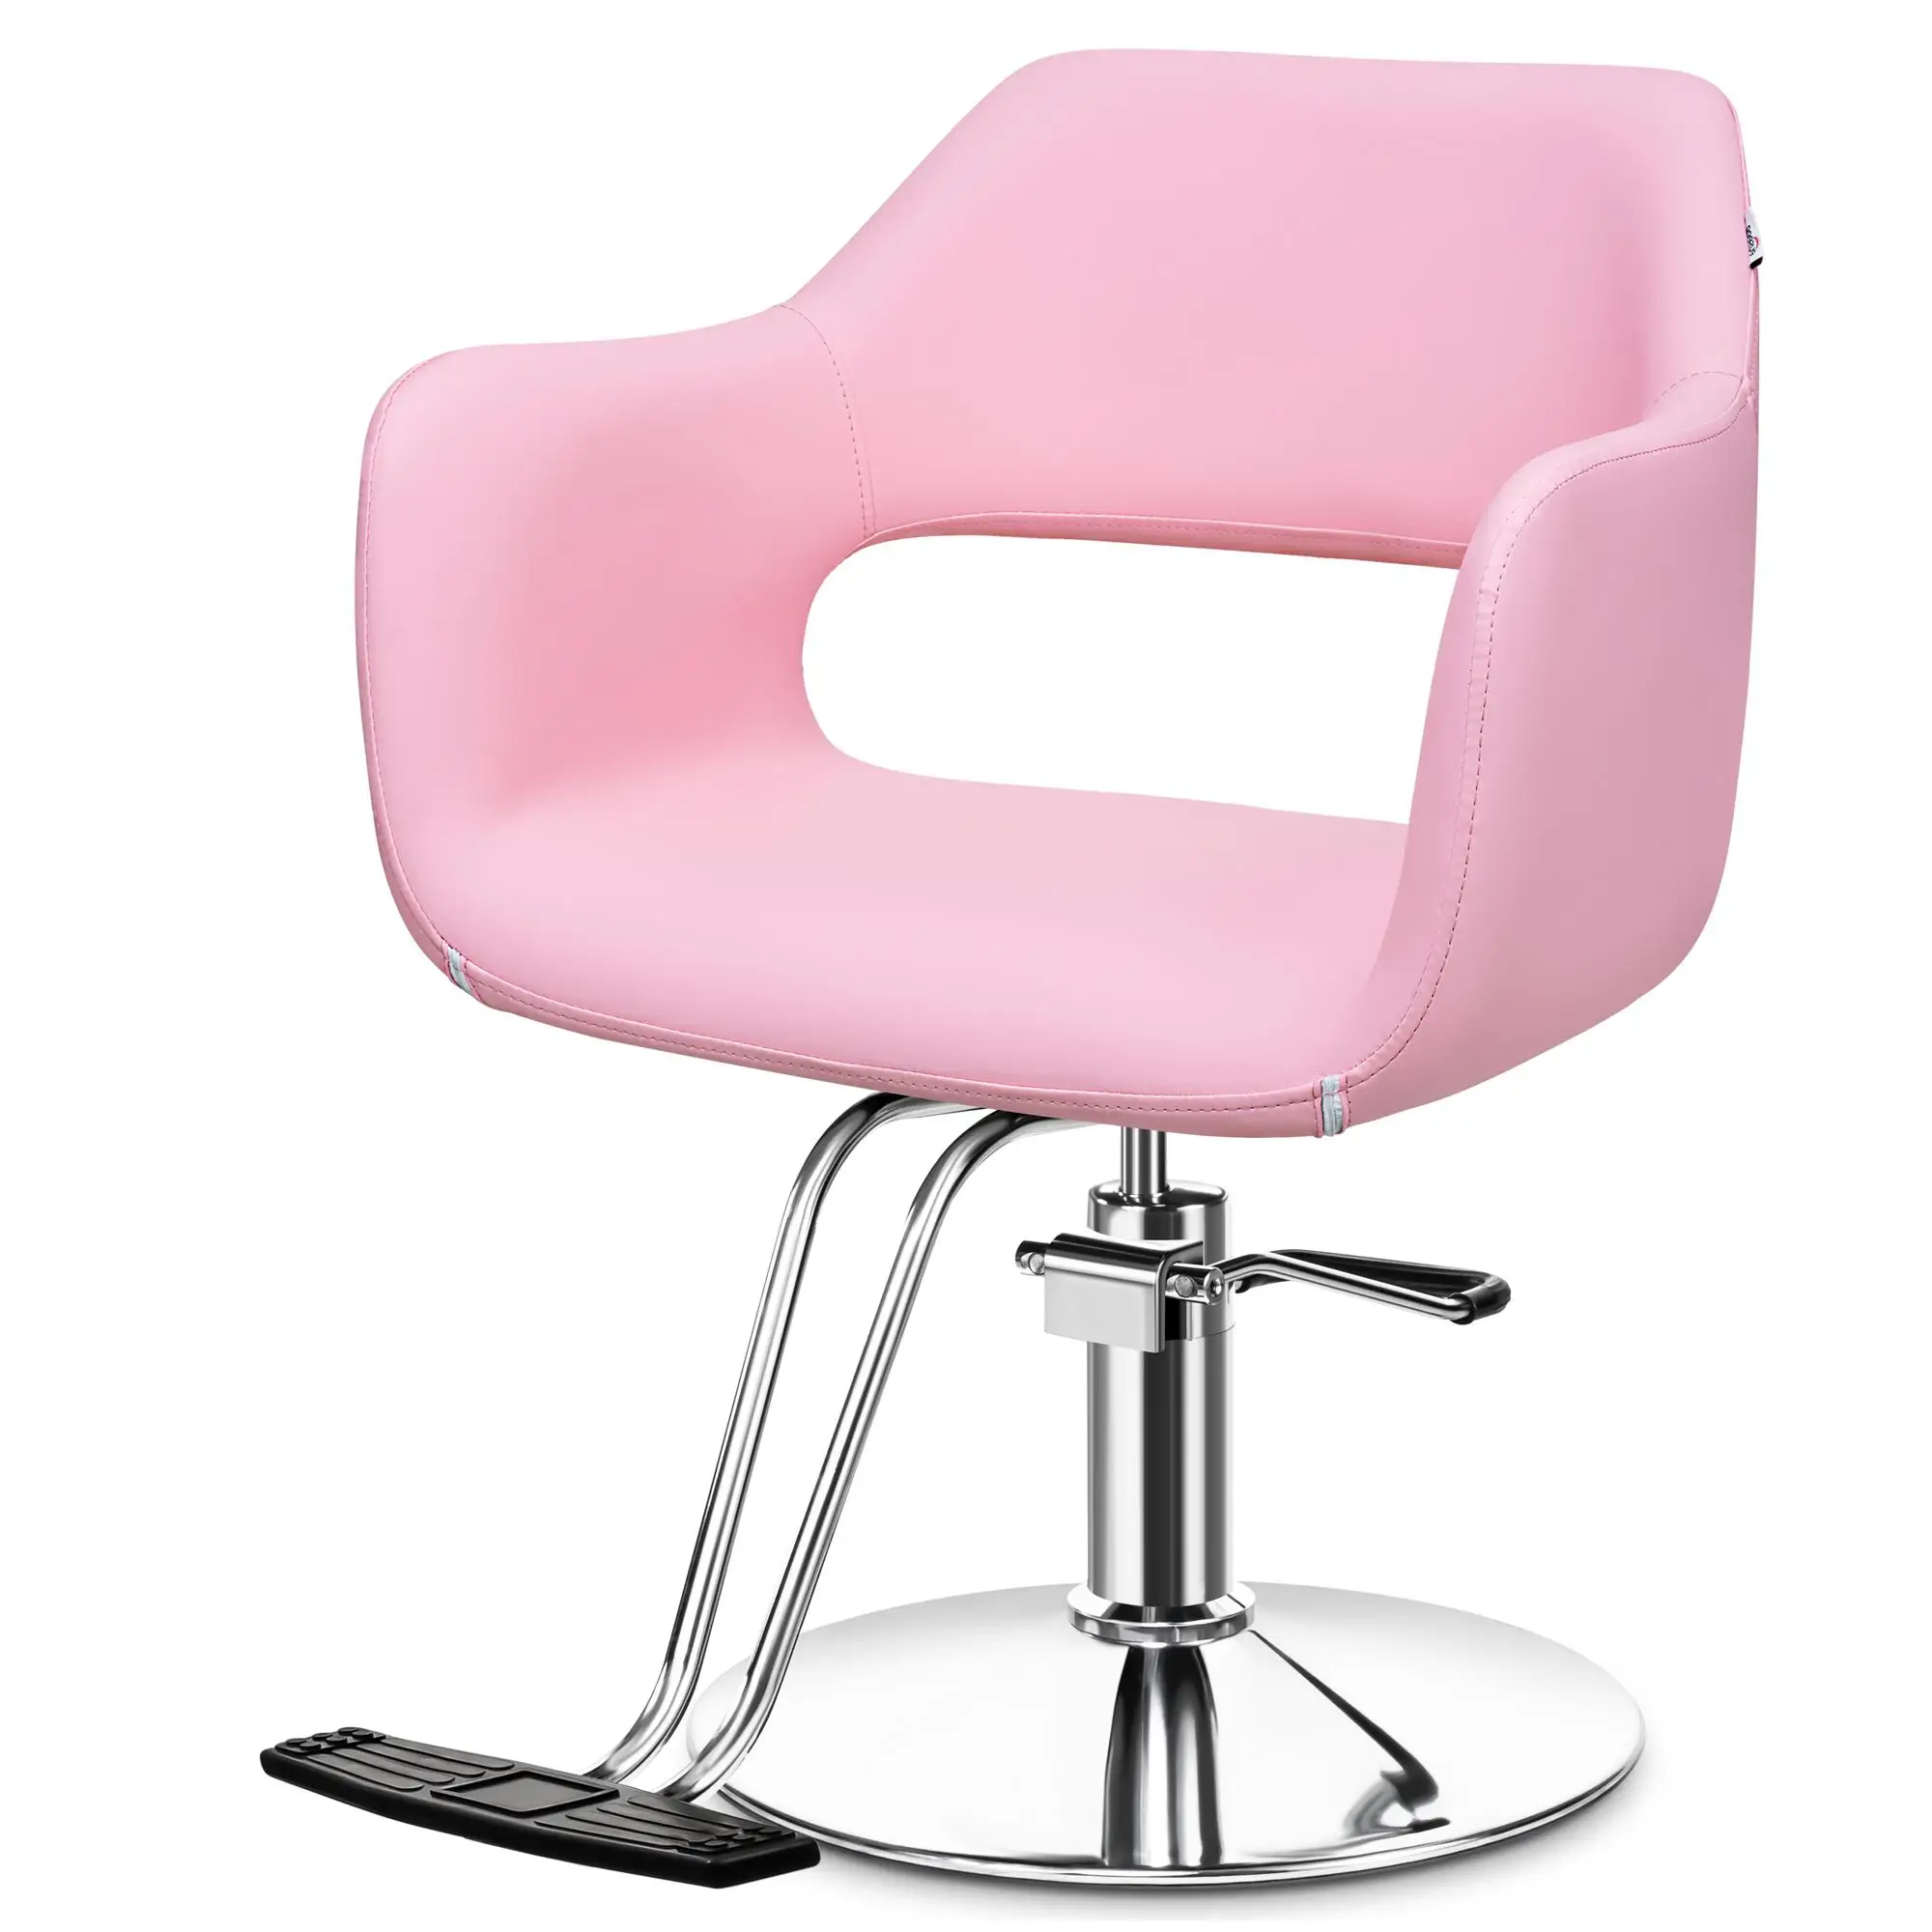 

Baasha Salon Chair for Hair Stylist, Hair Salon Chair with Heavy Duty Hydraulic Pump, 360° Swivel Hair Chair, Pink Stylist Chair